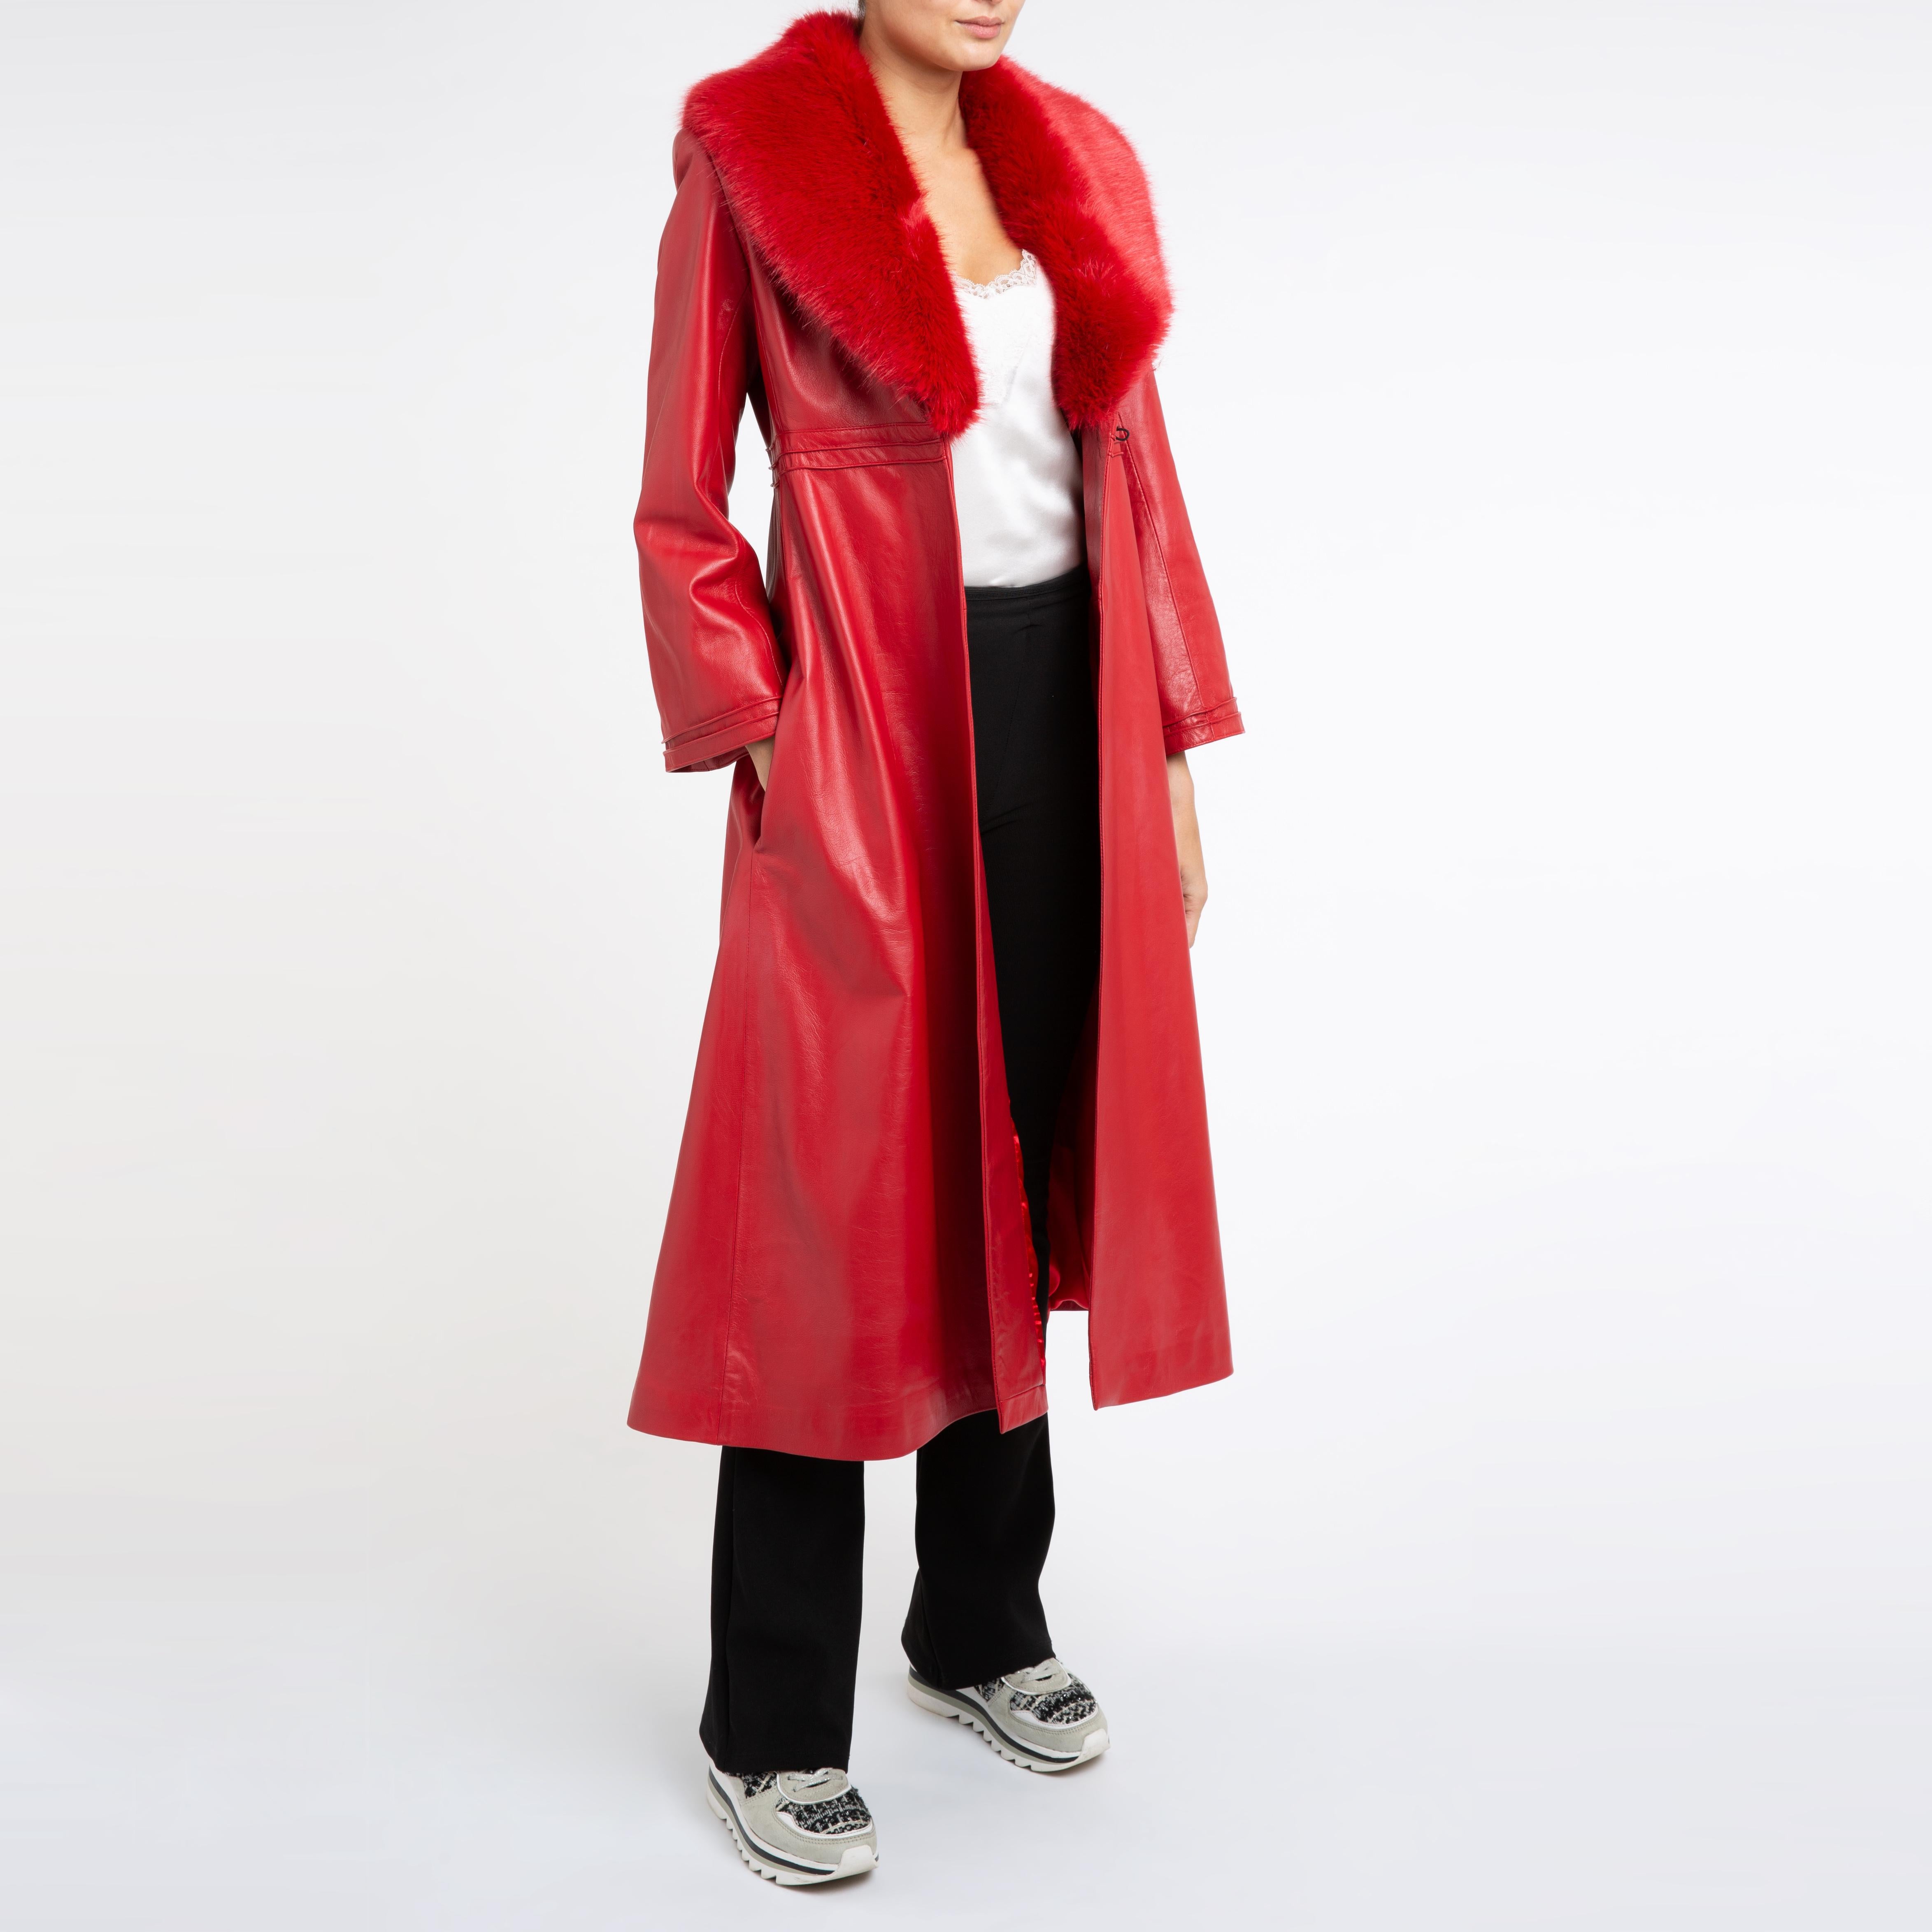 Verheyen London Edward Leather Coat with Faux Fur Collar in Red - Size uk 12 4